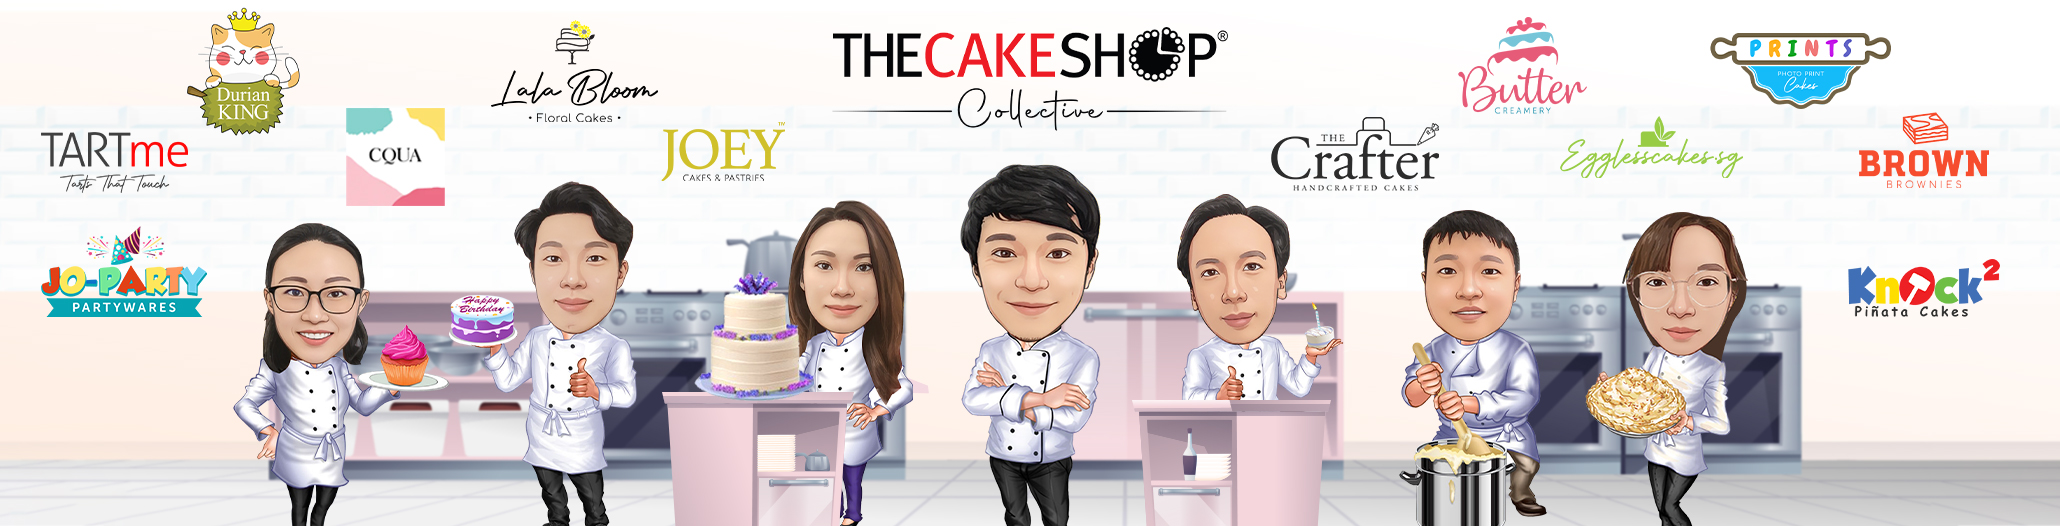 The Cake Shop.